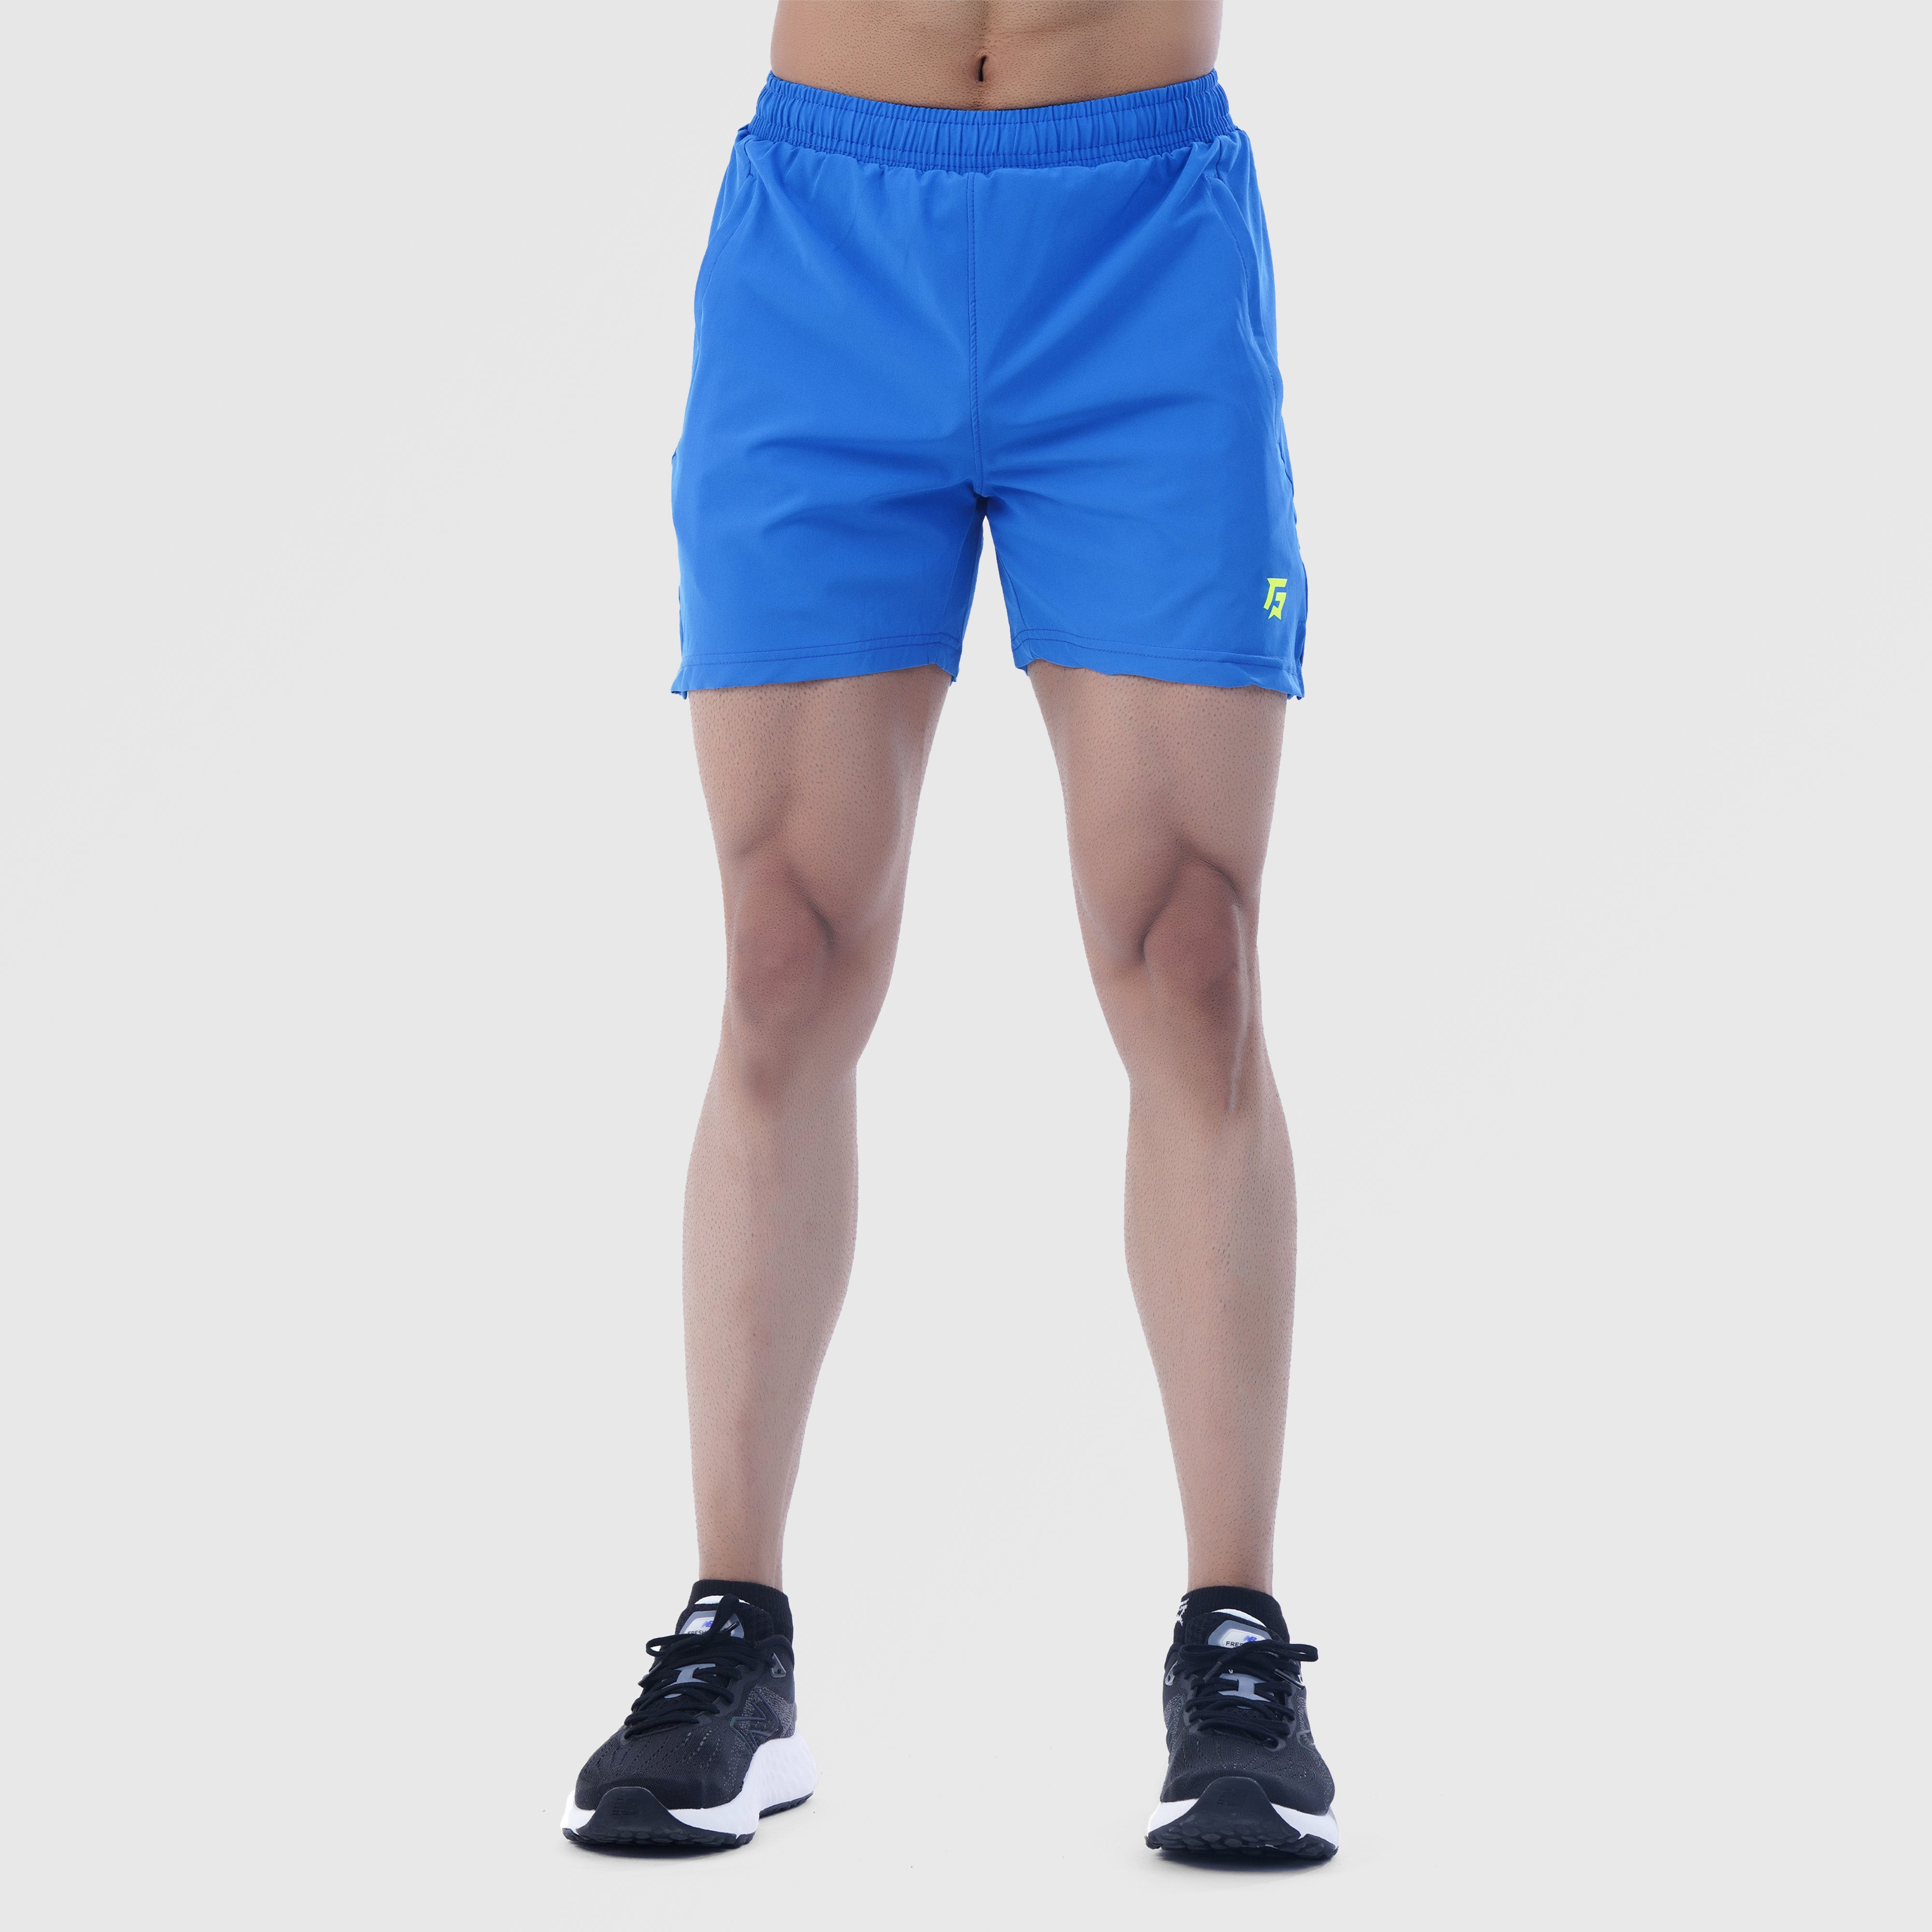 FlexEase Shorts (Electric Blue)